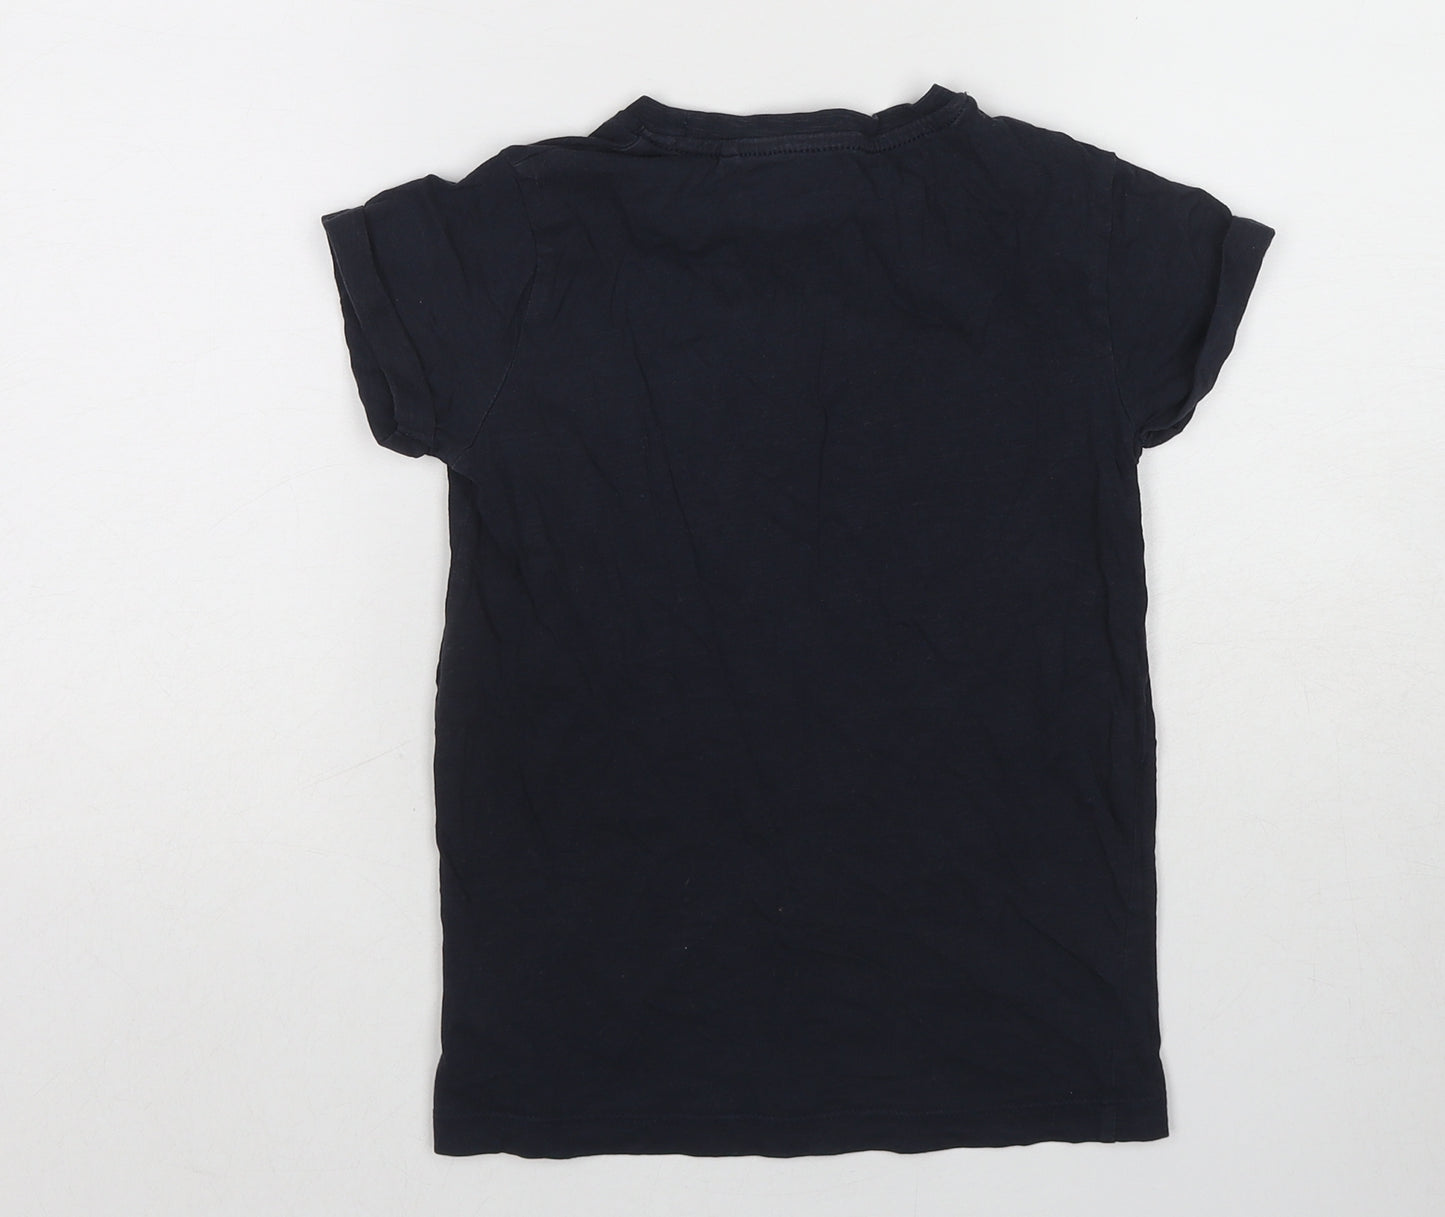 NEXT Girls Blue Cotton Basic T-Shirt Size 7-8 Years Round Neck Pullover